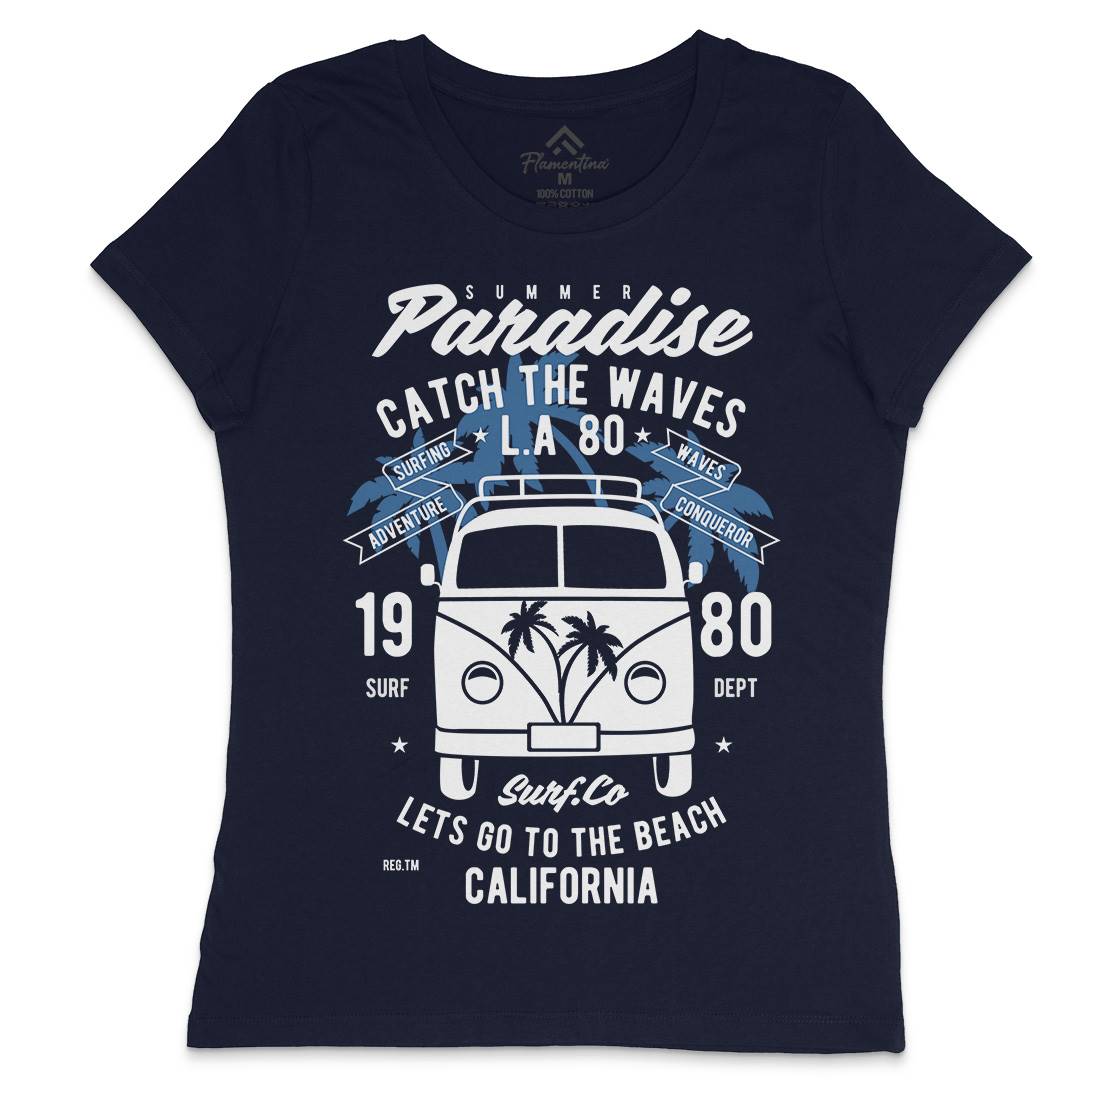 Catch The Waves Surfing Van Womens Crew Neck T-Shirt Surf B393